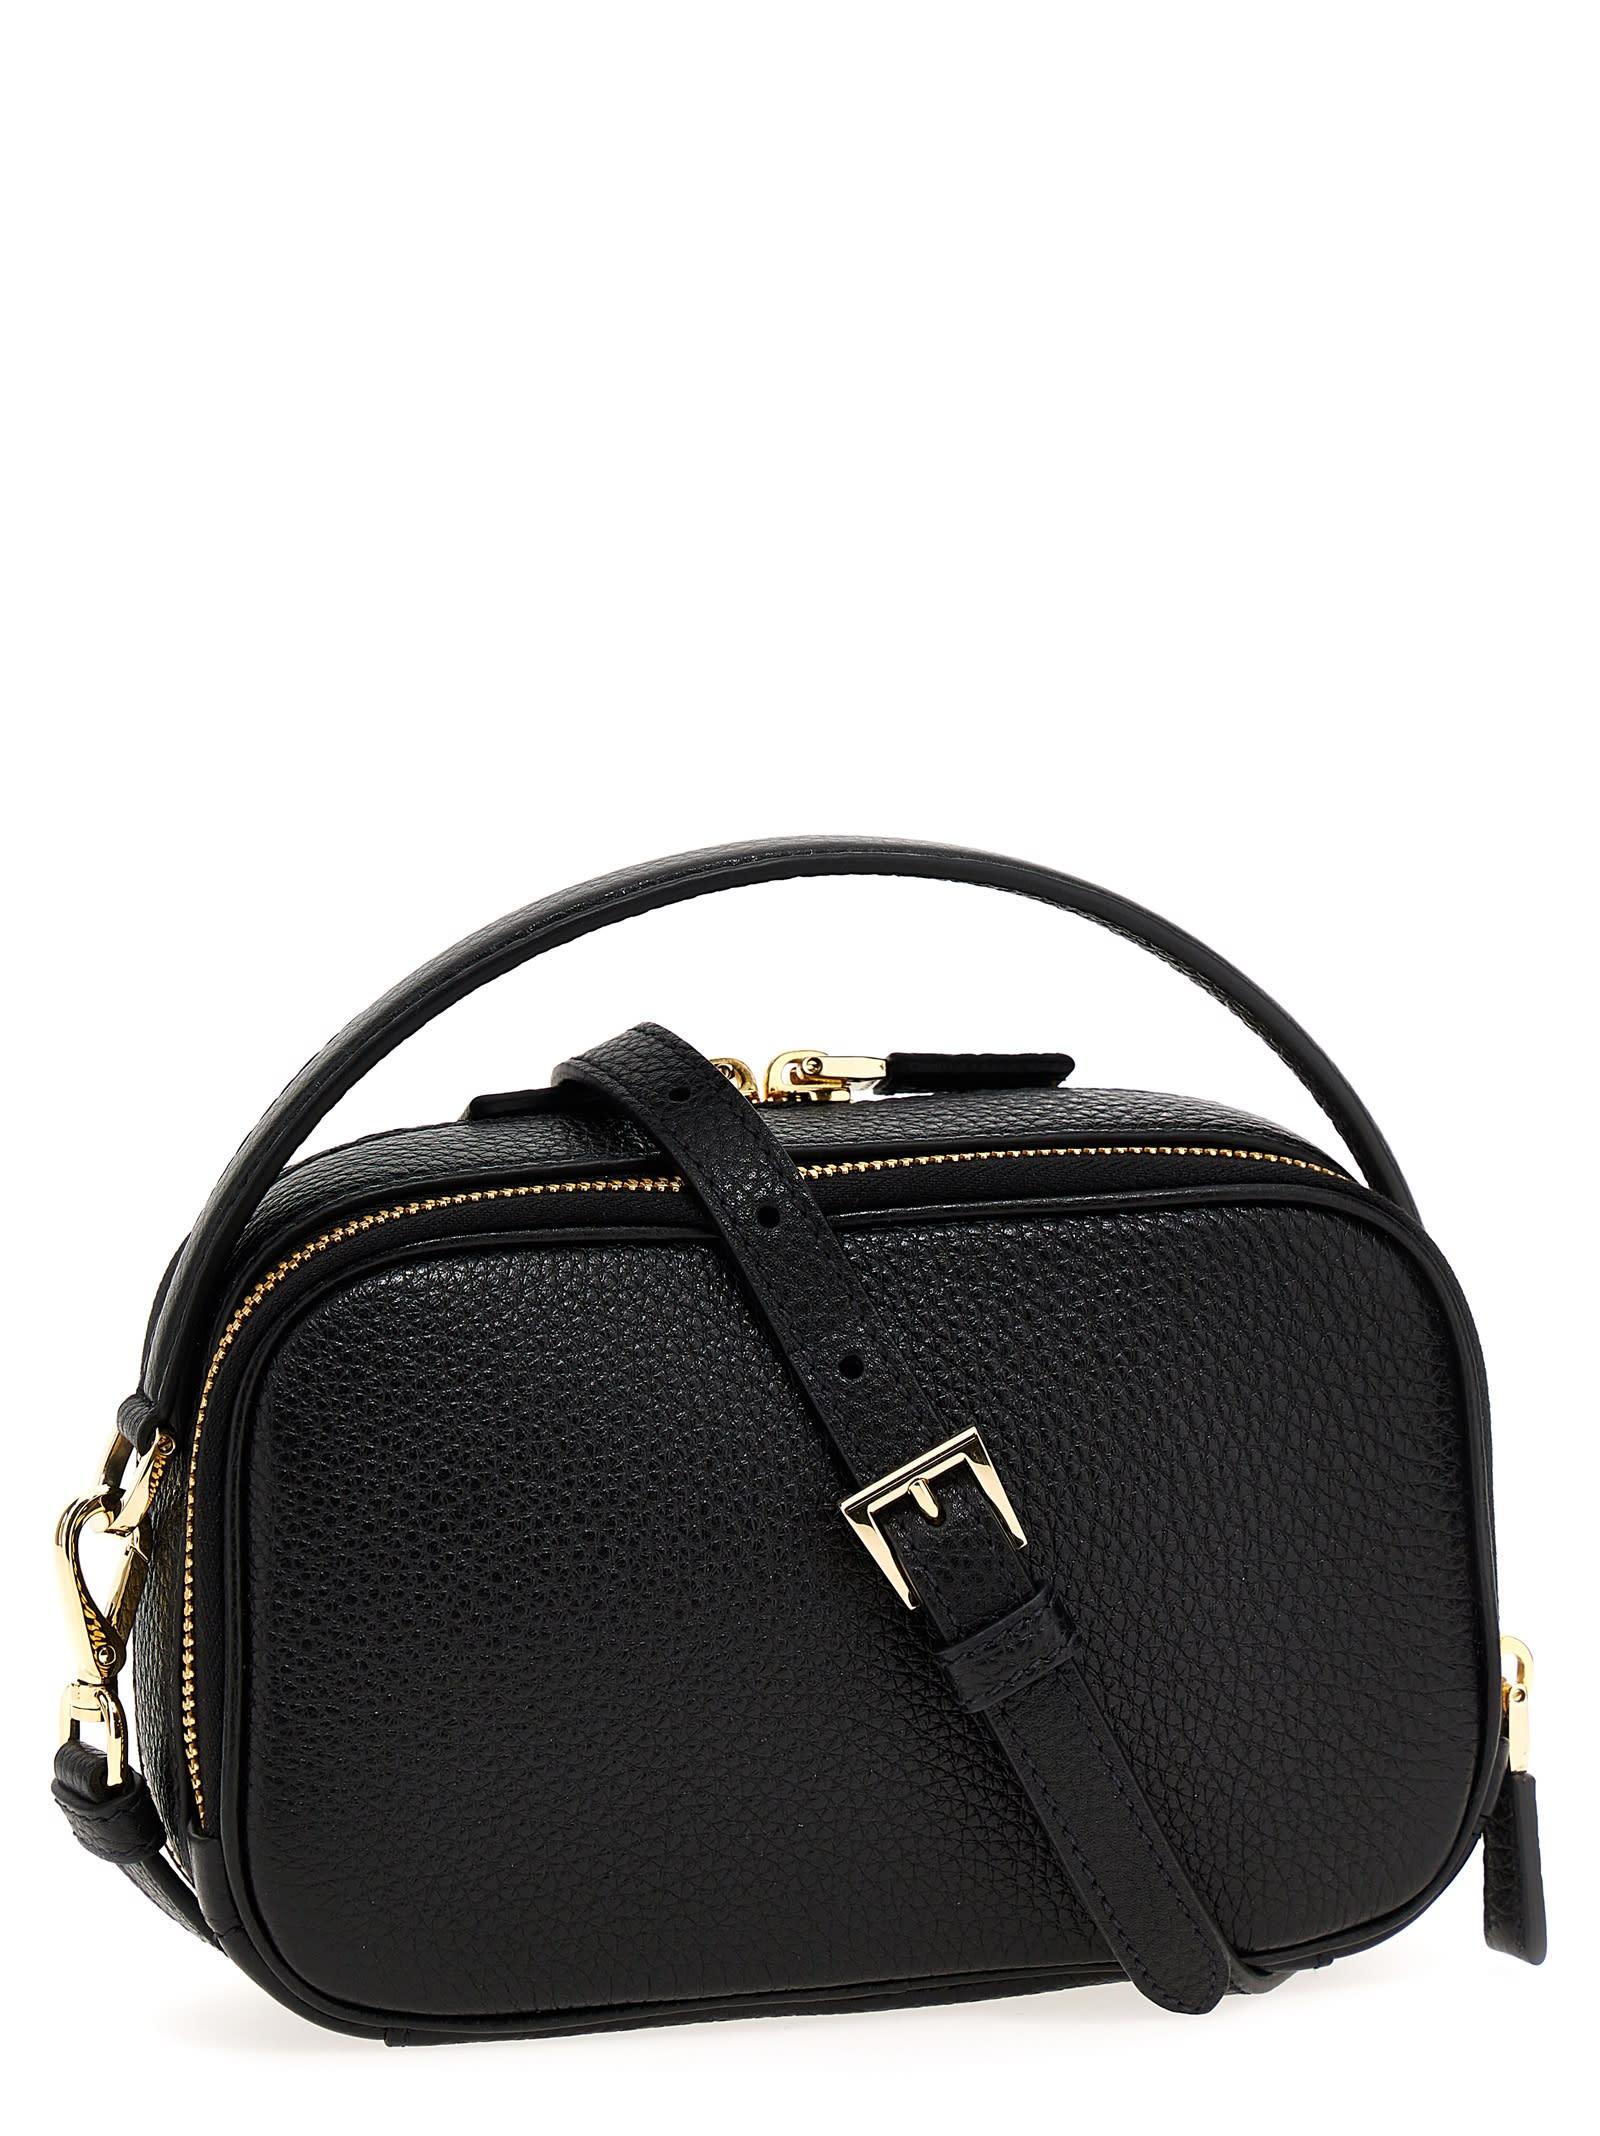 Prada - Flou White Leather Top Zip Camera Bag